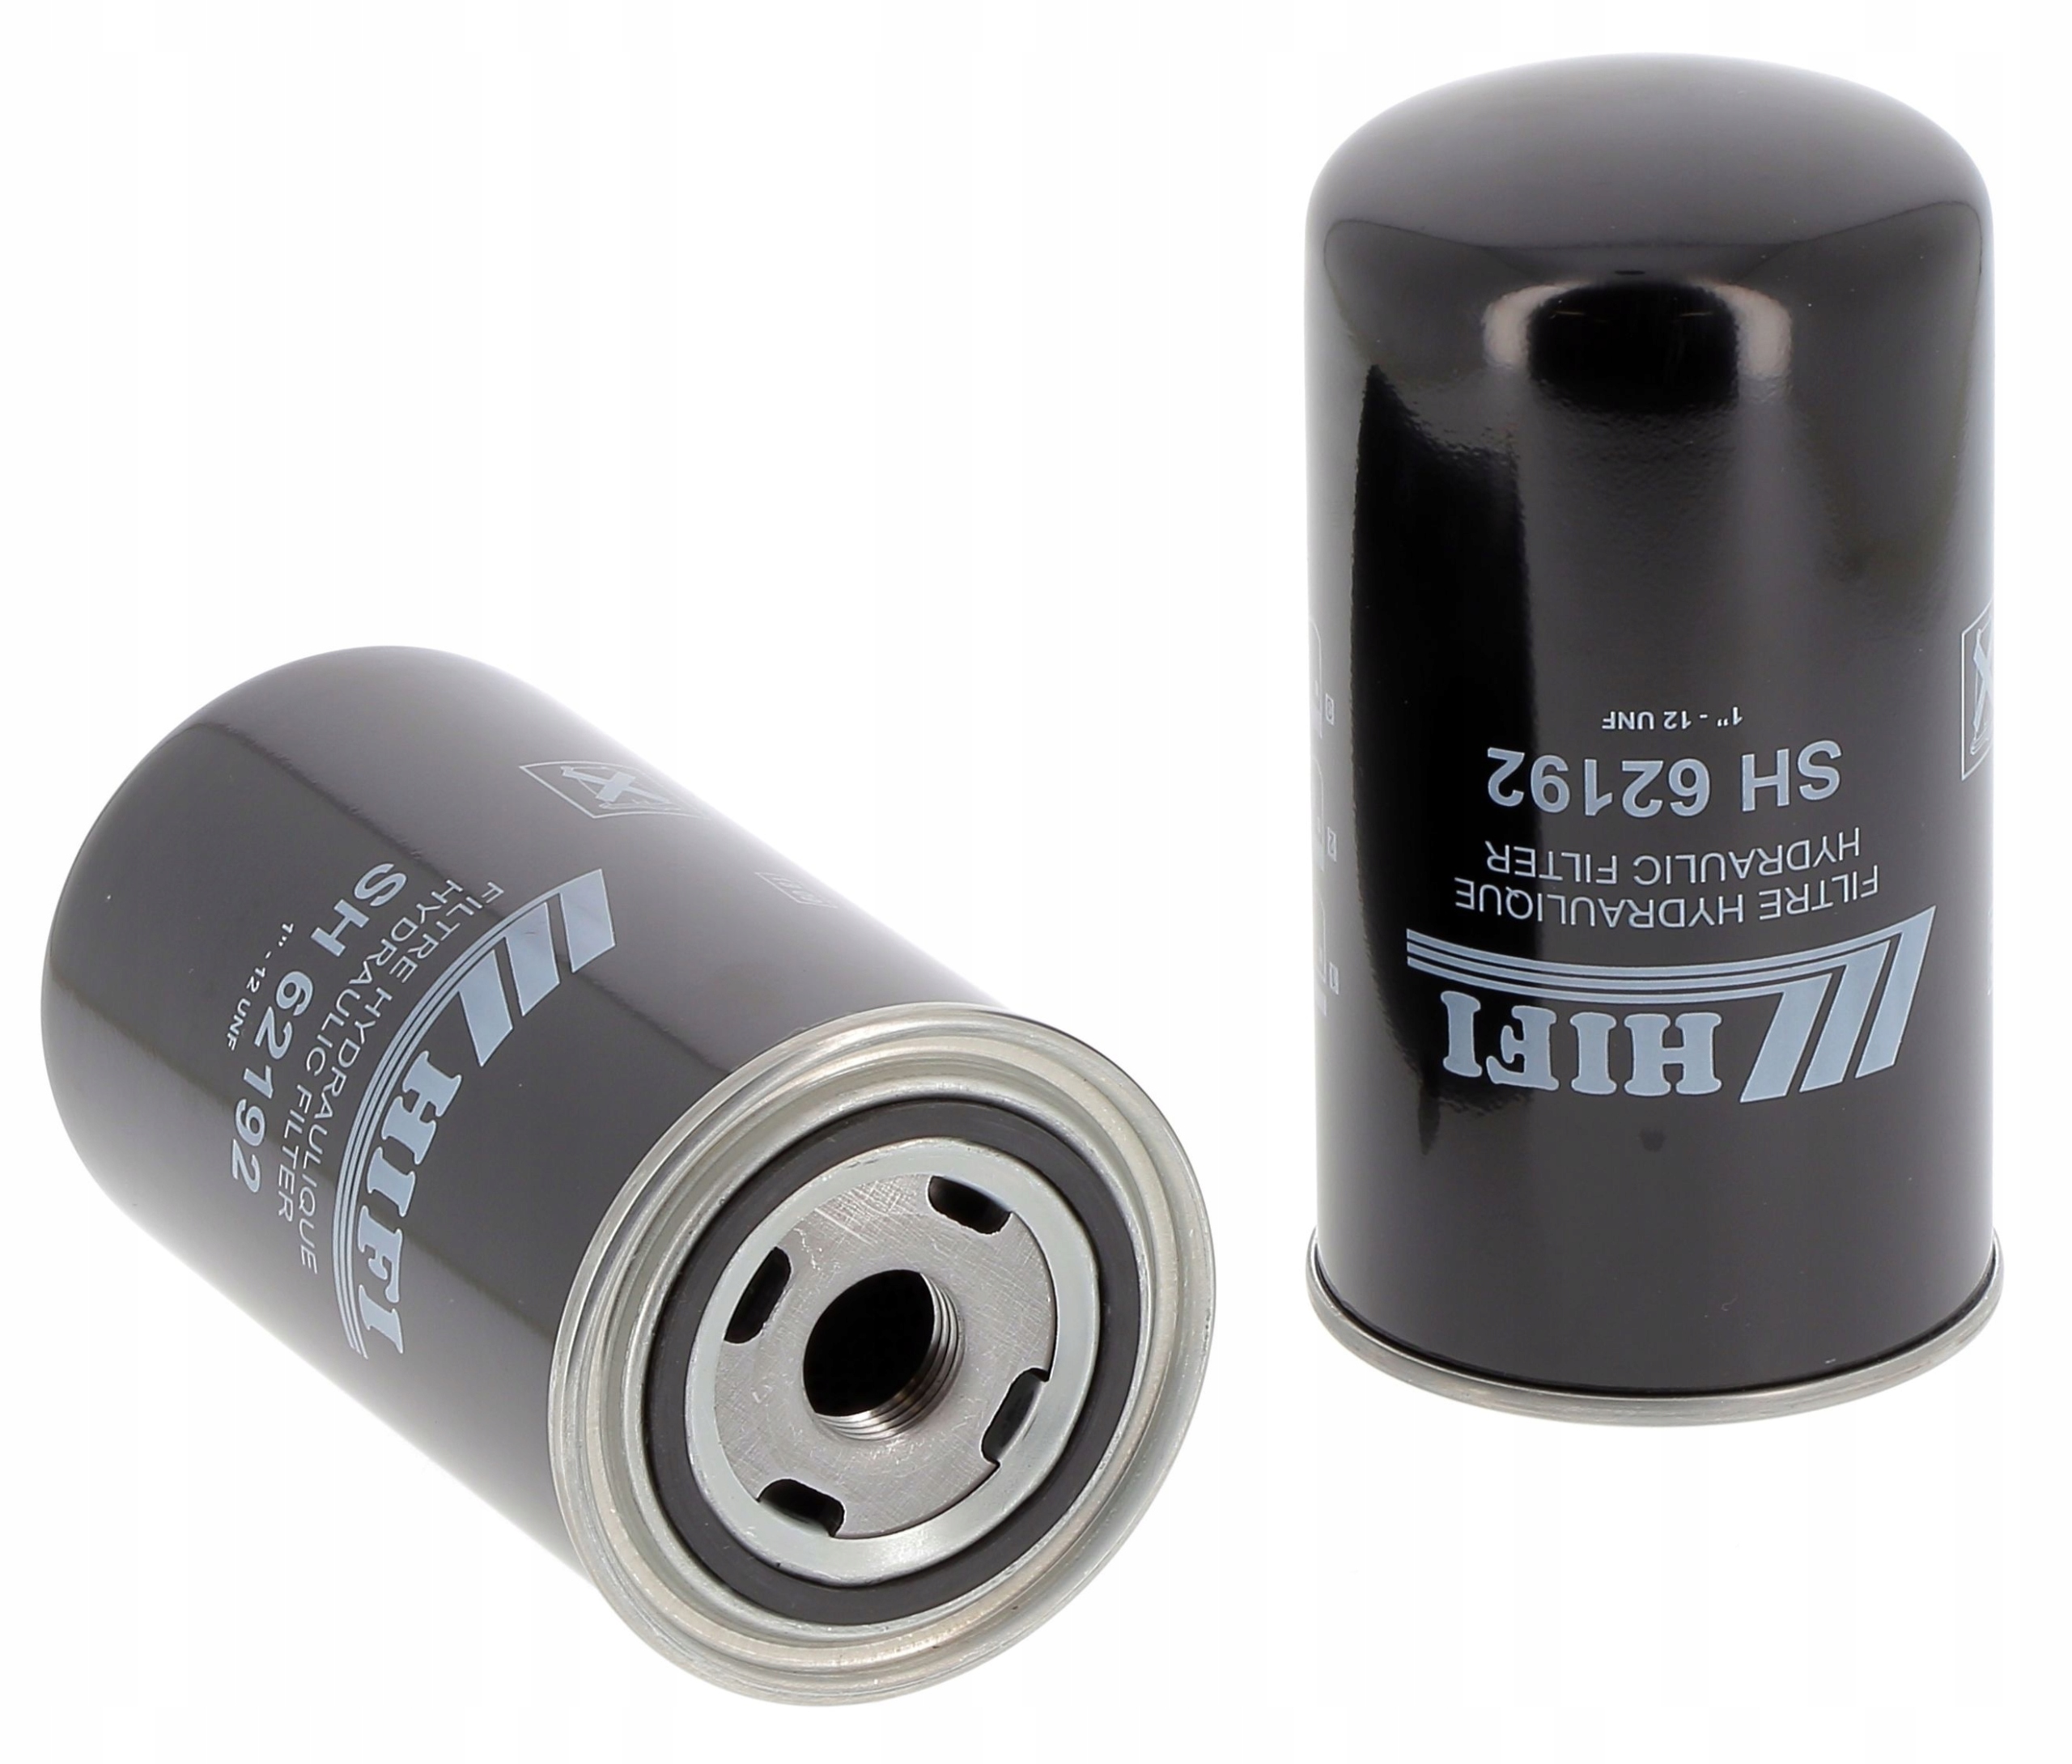 Фильтр hifi filter. Sn5074 HIFI Filter фильтр топливный. Sh62515 фильтр гидравлический. Фильтр гидравлический HIFI sh63907. Фильтр гидравлический sh93214.